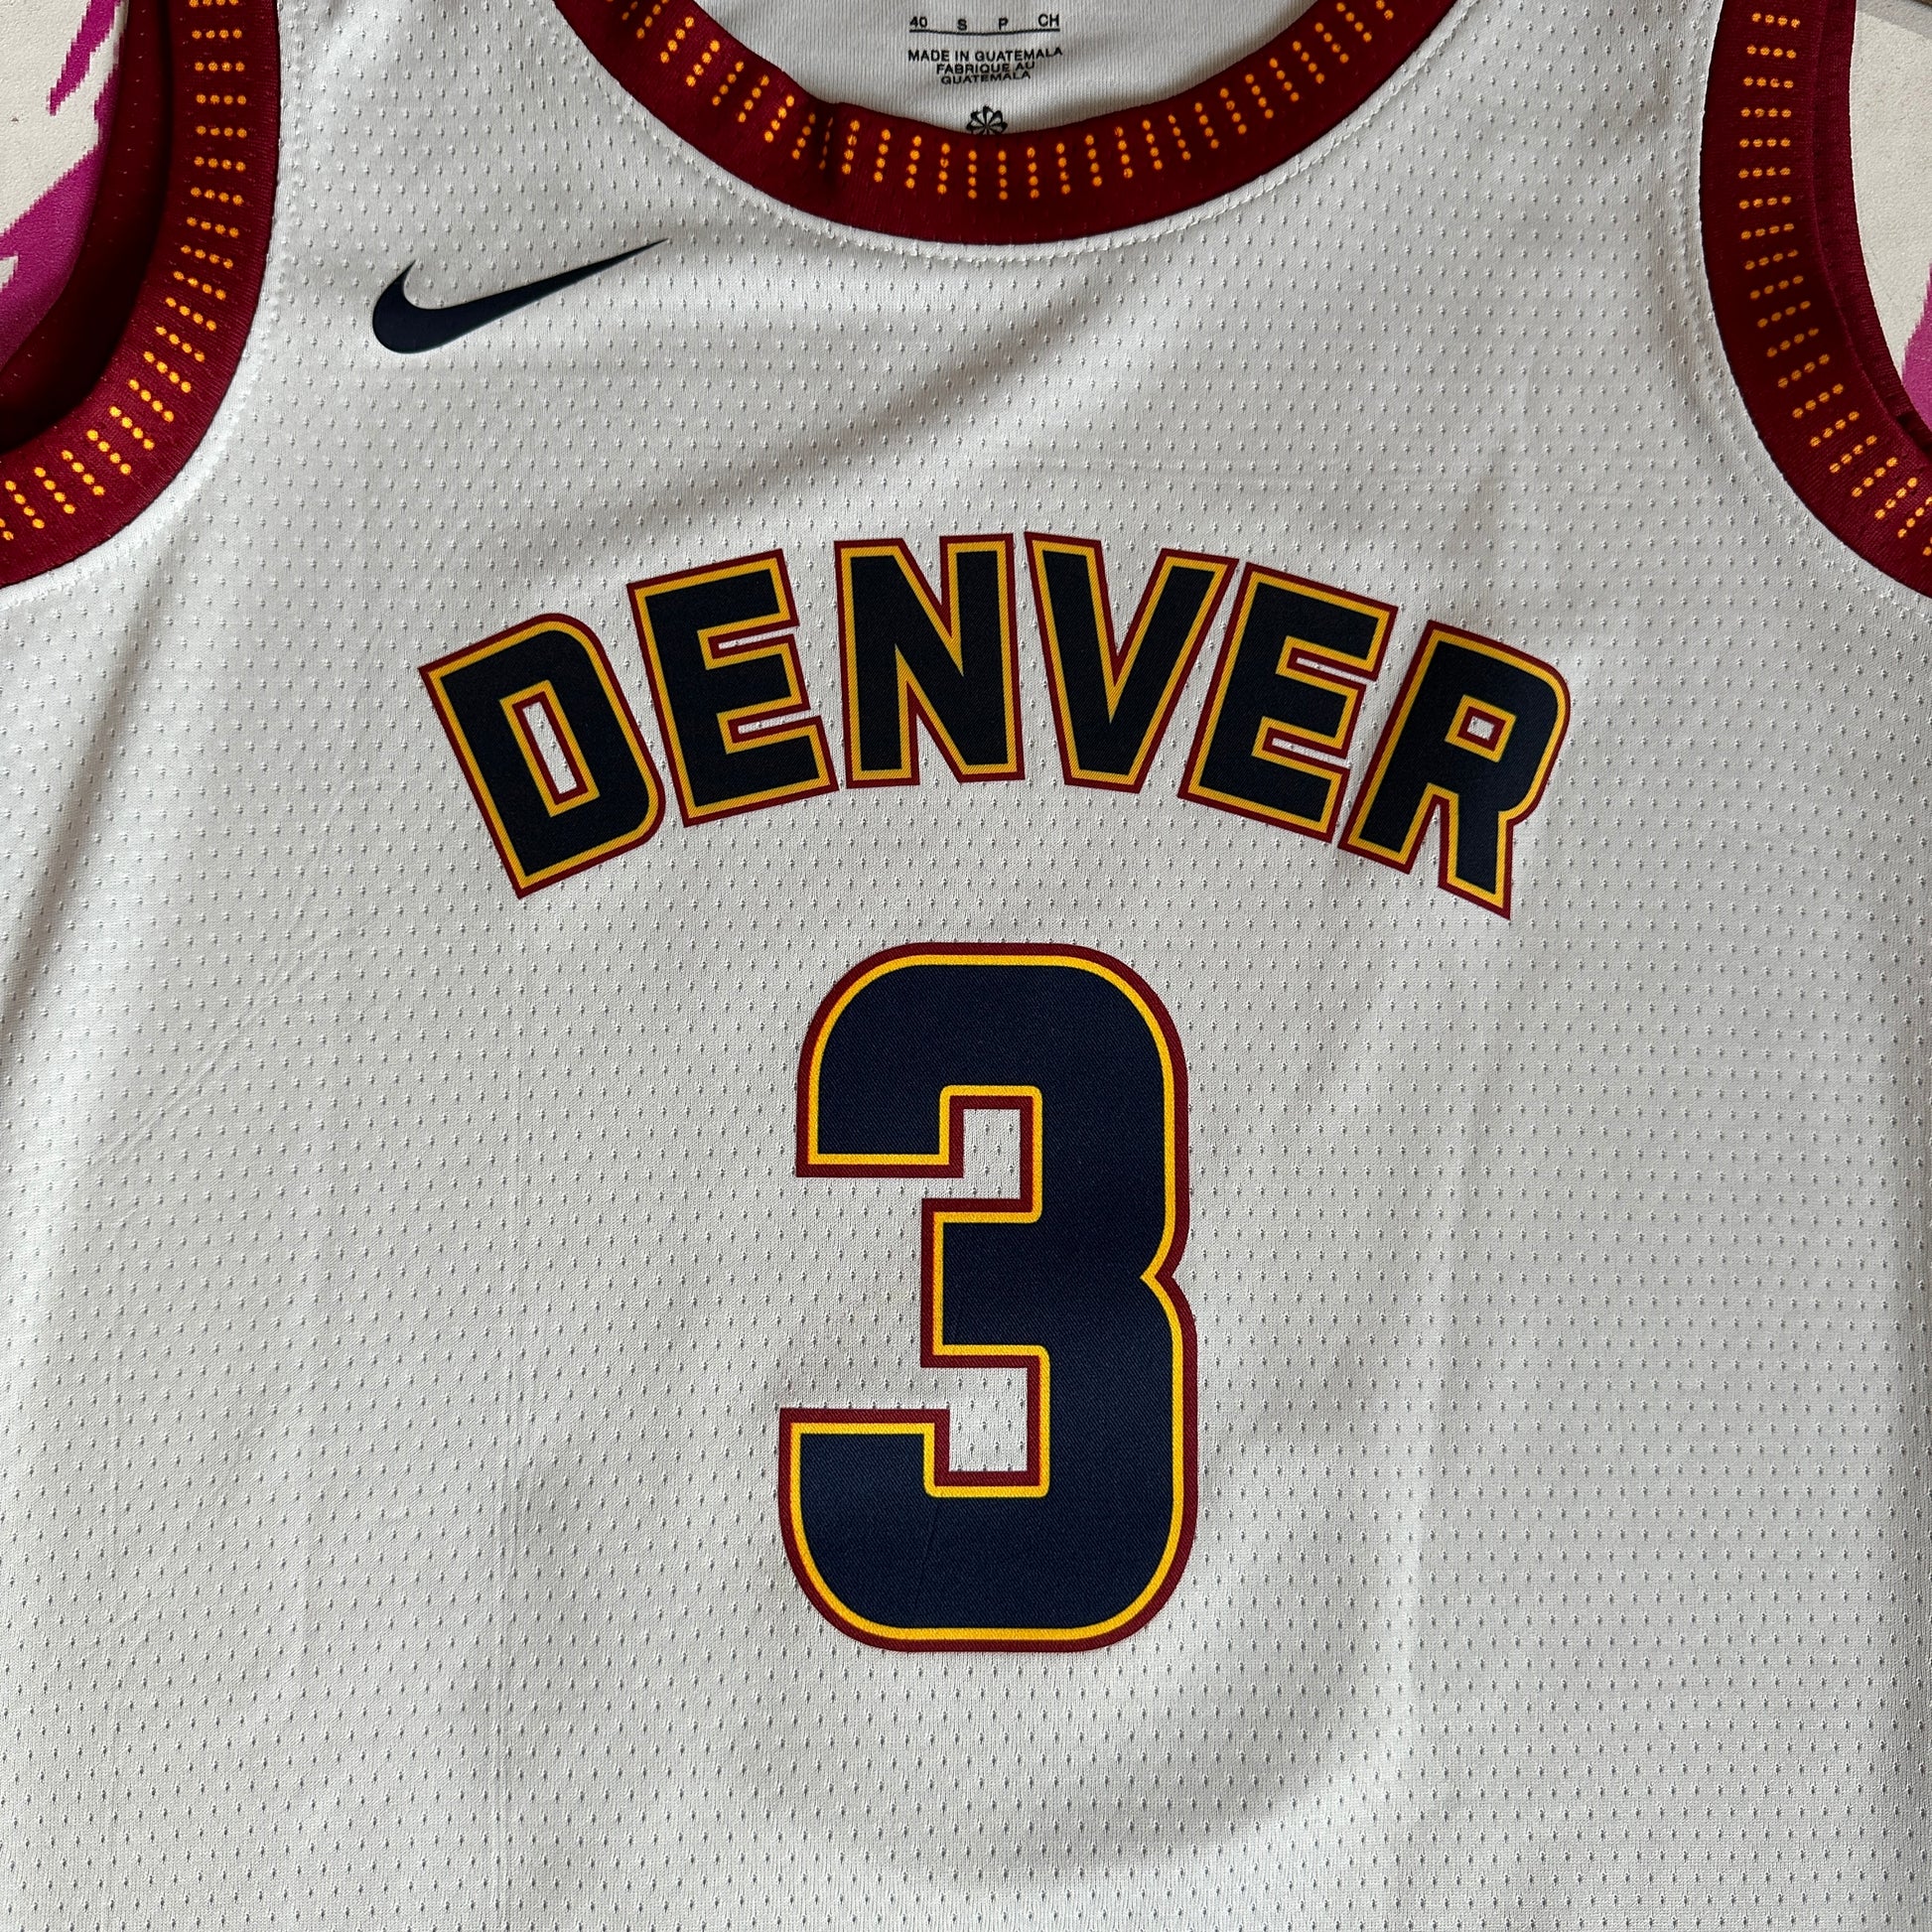 Denver Nuggets 22-23 City Edition Uniform